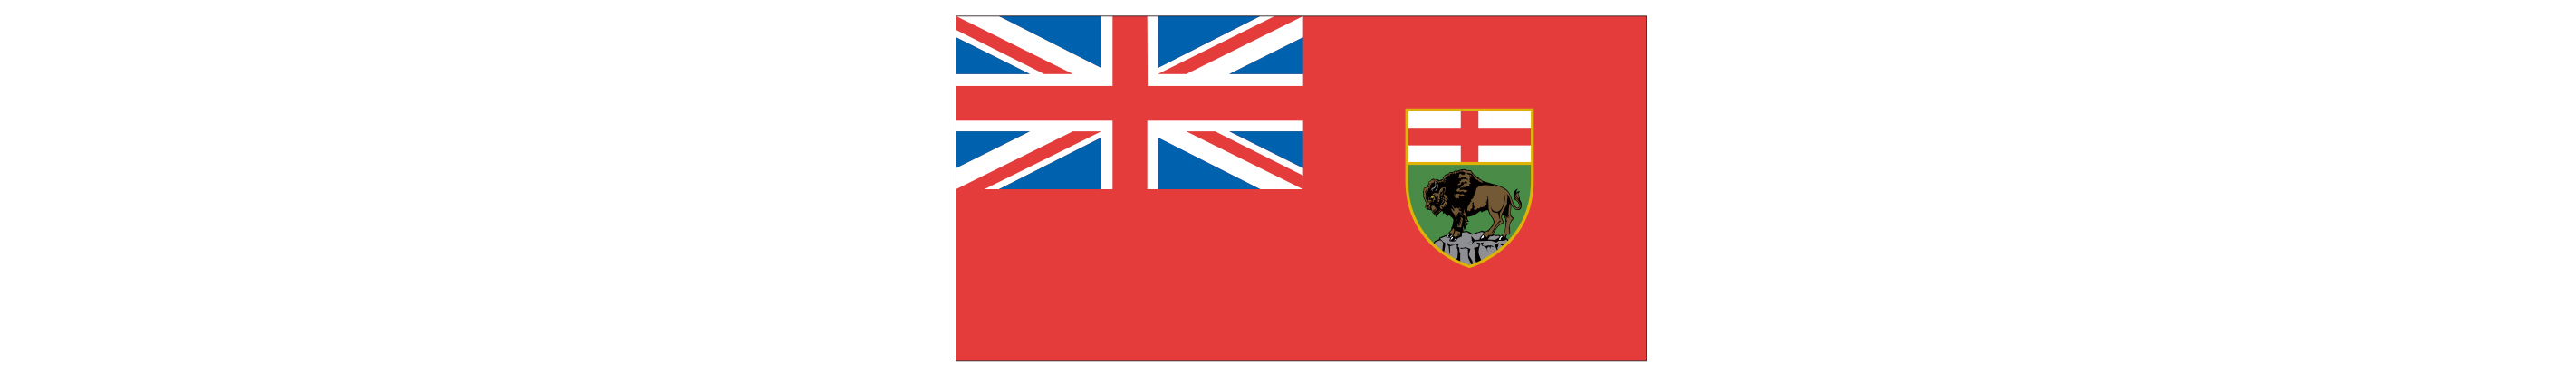 drapeau du Manitoba